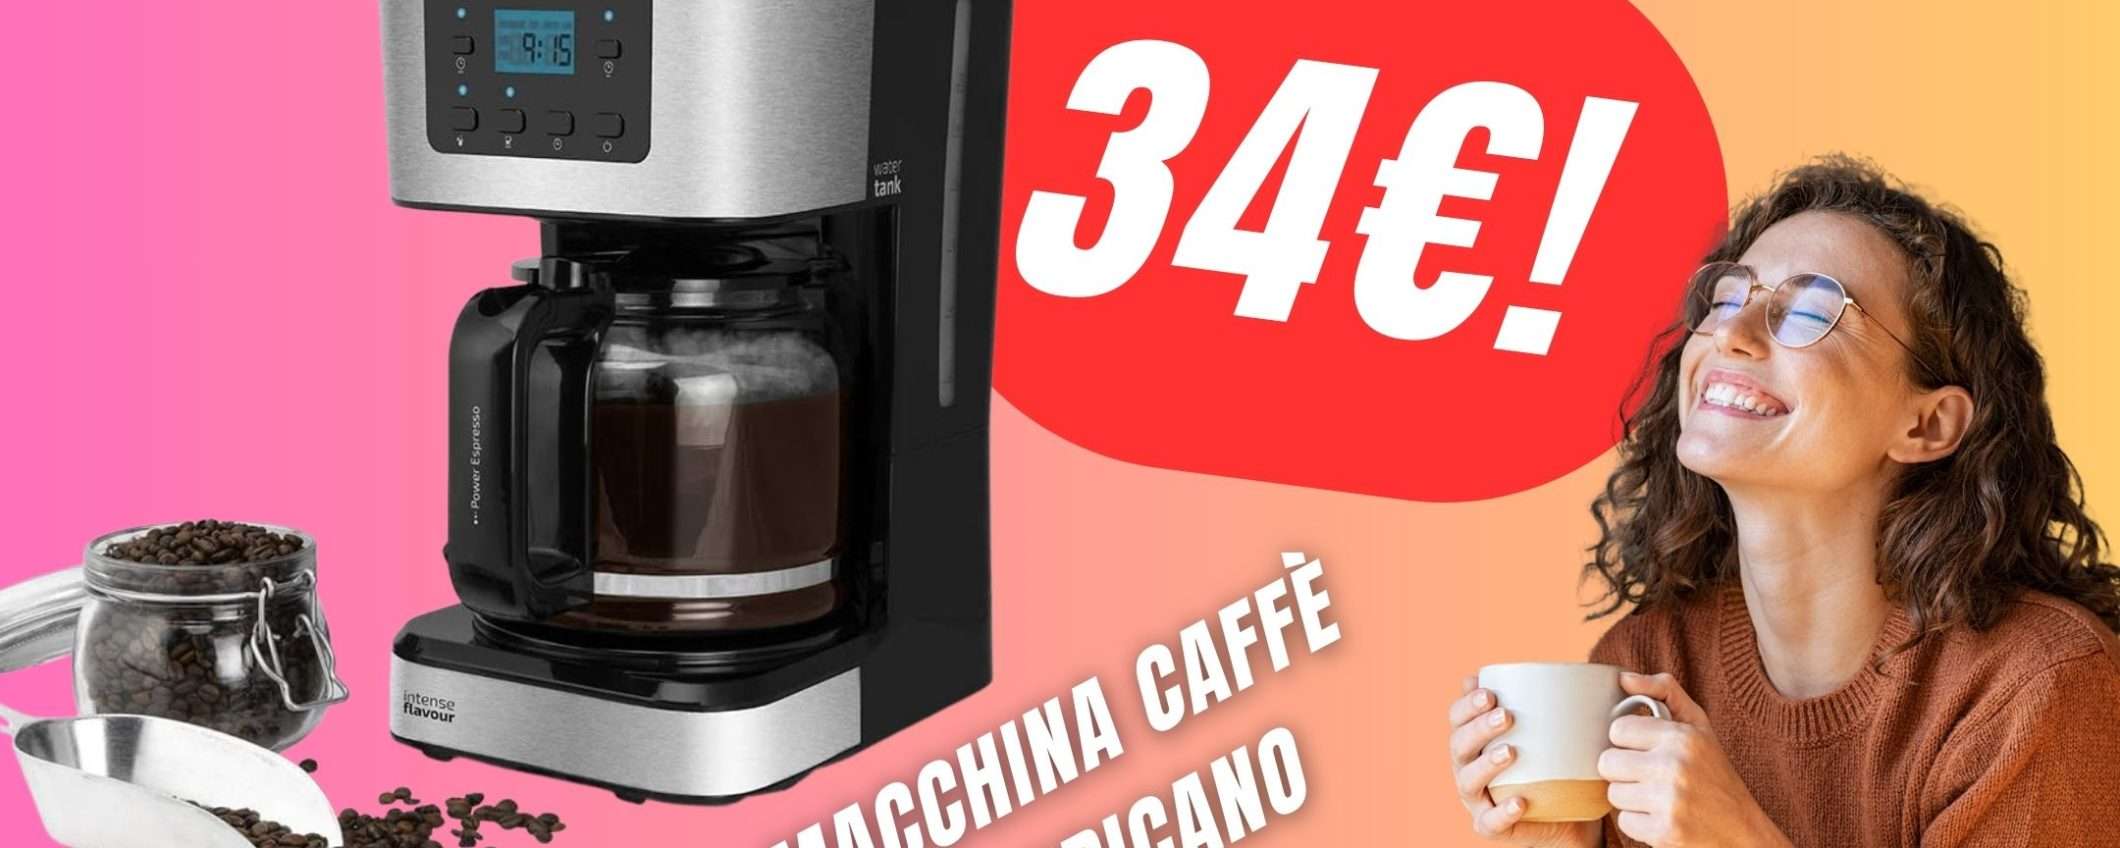 Cafetera Cecotec Goteo Coffee 66 Heat Smart 